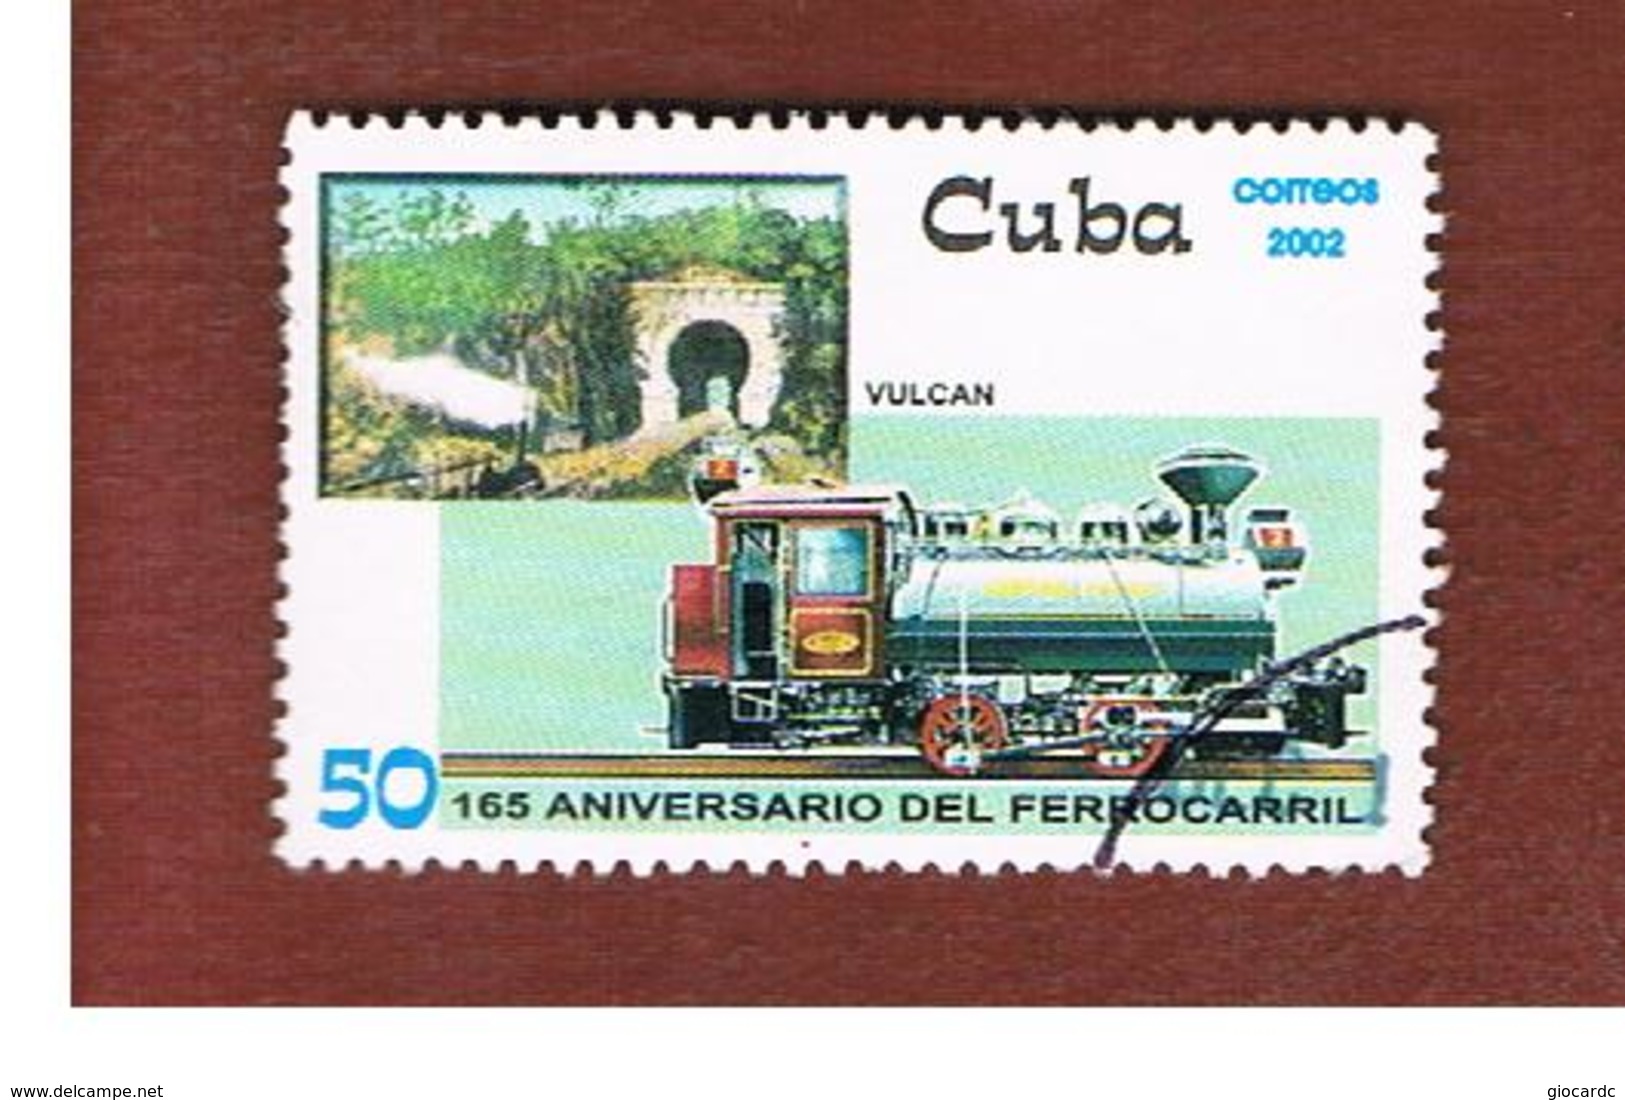 CUBA -  MI  4475 -  2002   LOCOMOTIVES: VULCAN    - USED - Oblitérés